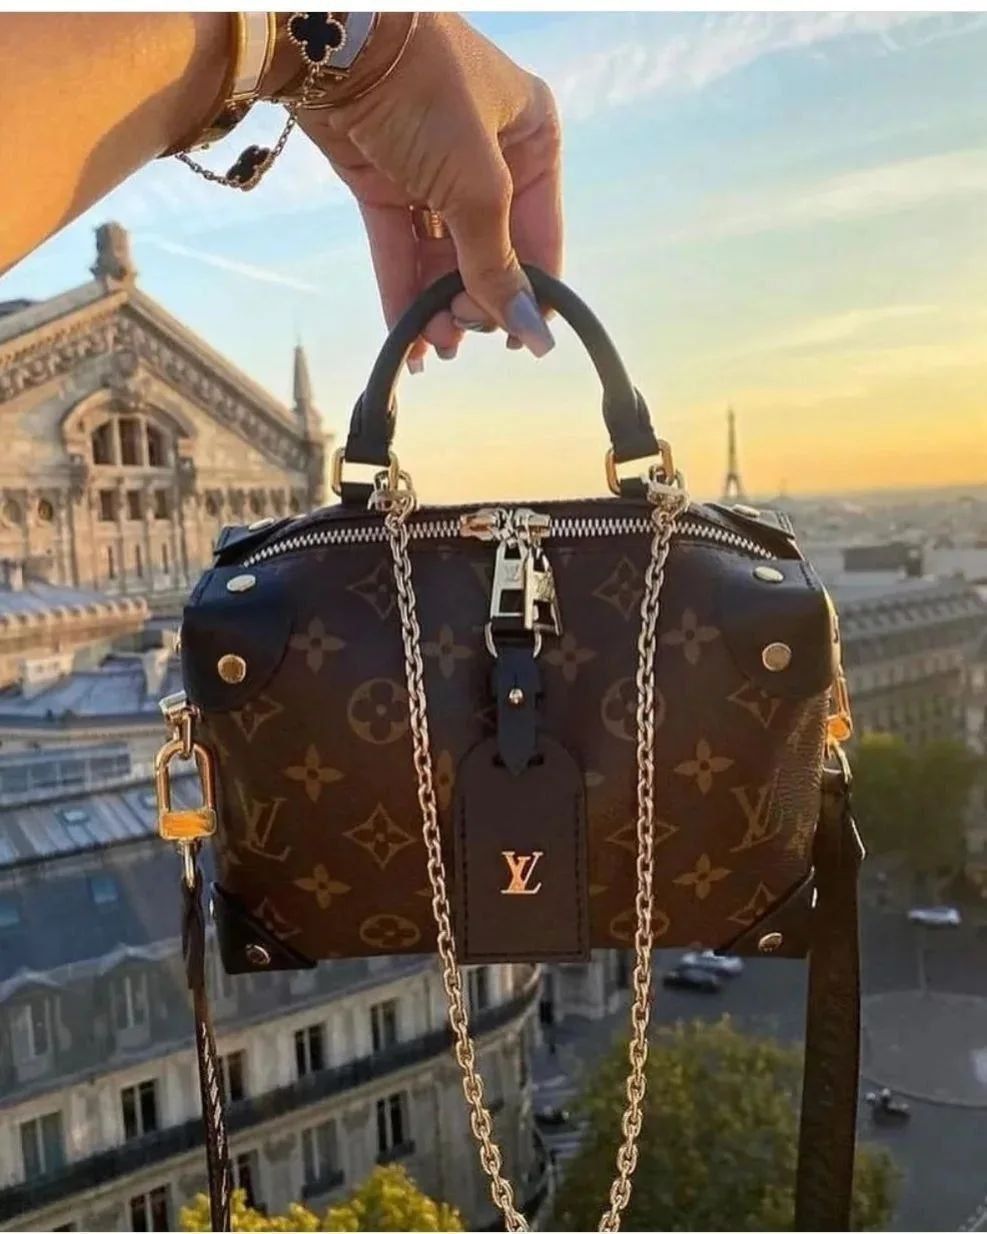 Сумки Louis Vuitton Petite Malle, сумка Луи Витон
Сумки Louis Vuitton